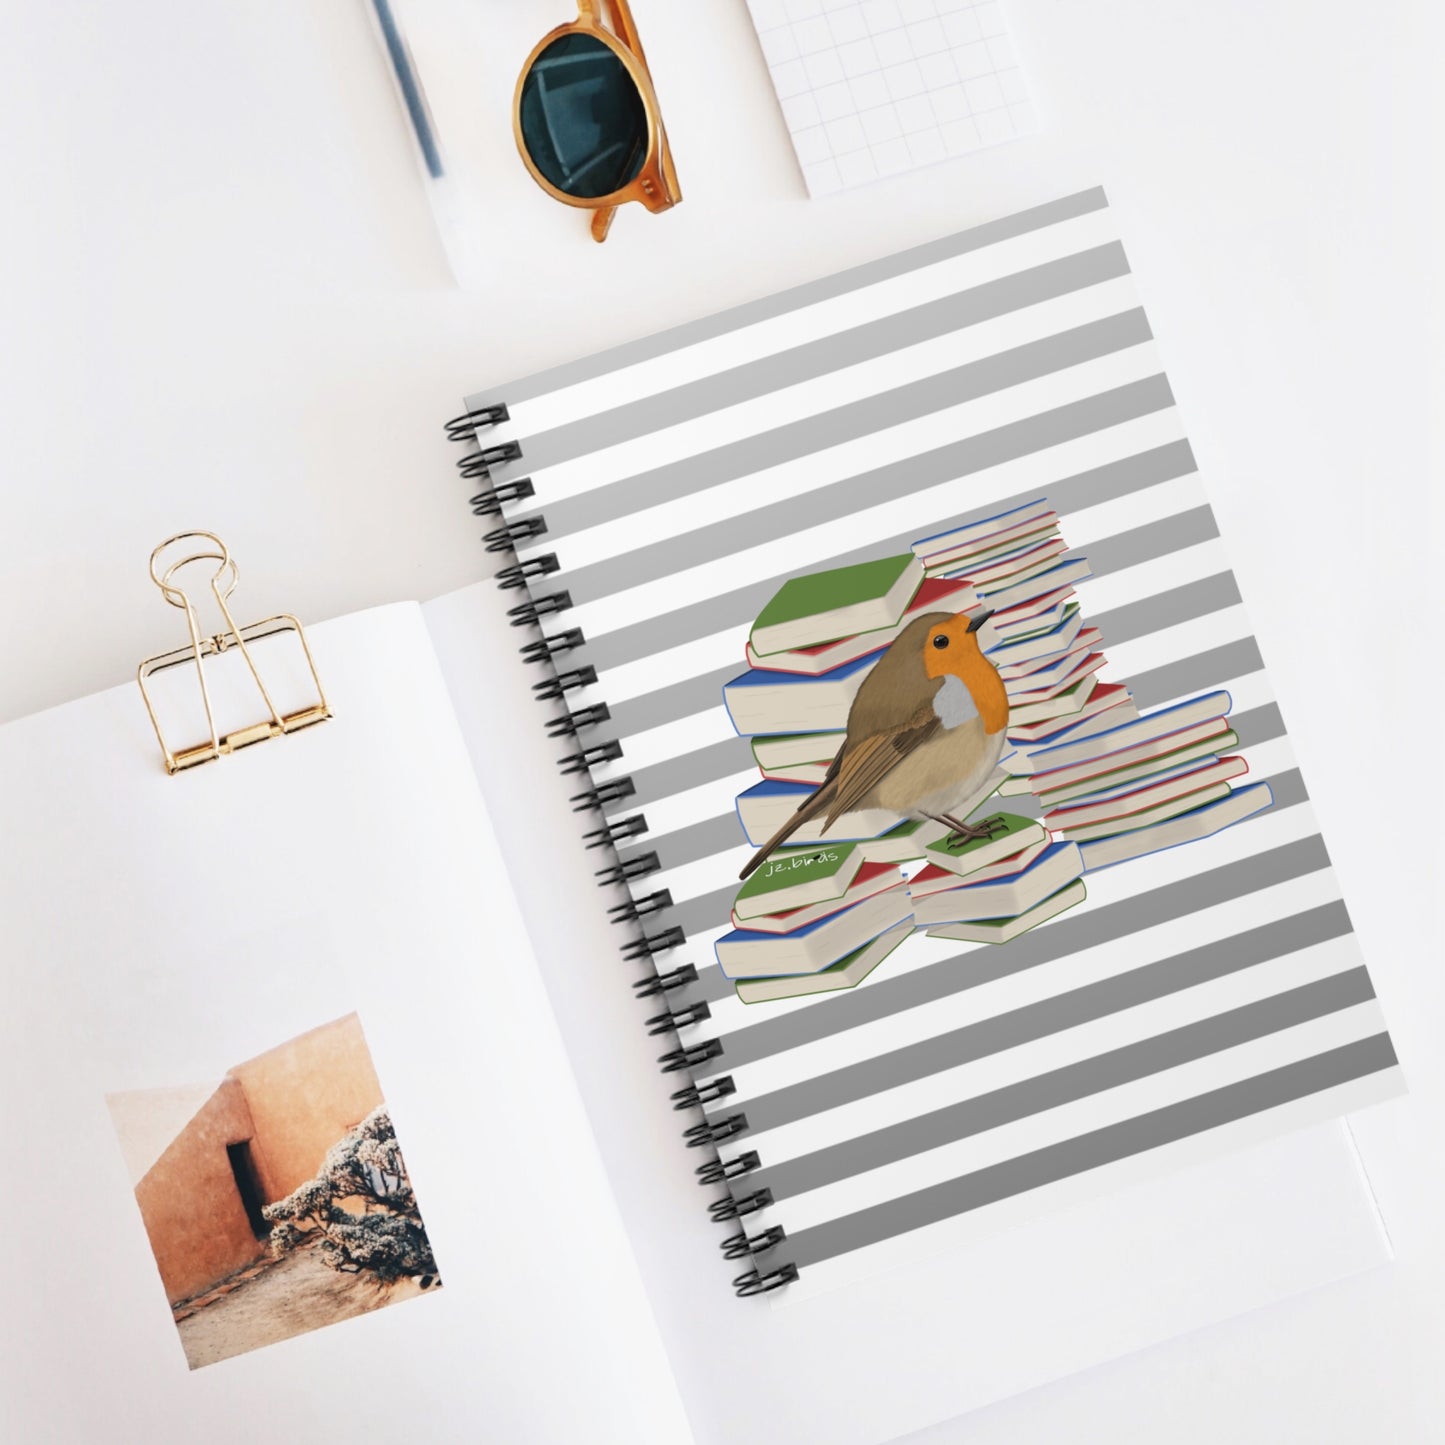 European Robin Bird with Books Birdlover Bookworm Spiral Notebook Ruled Line